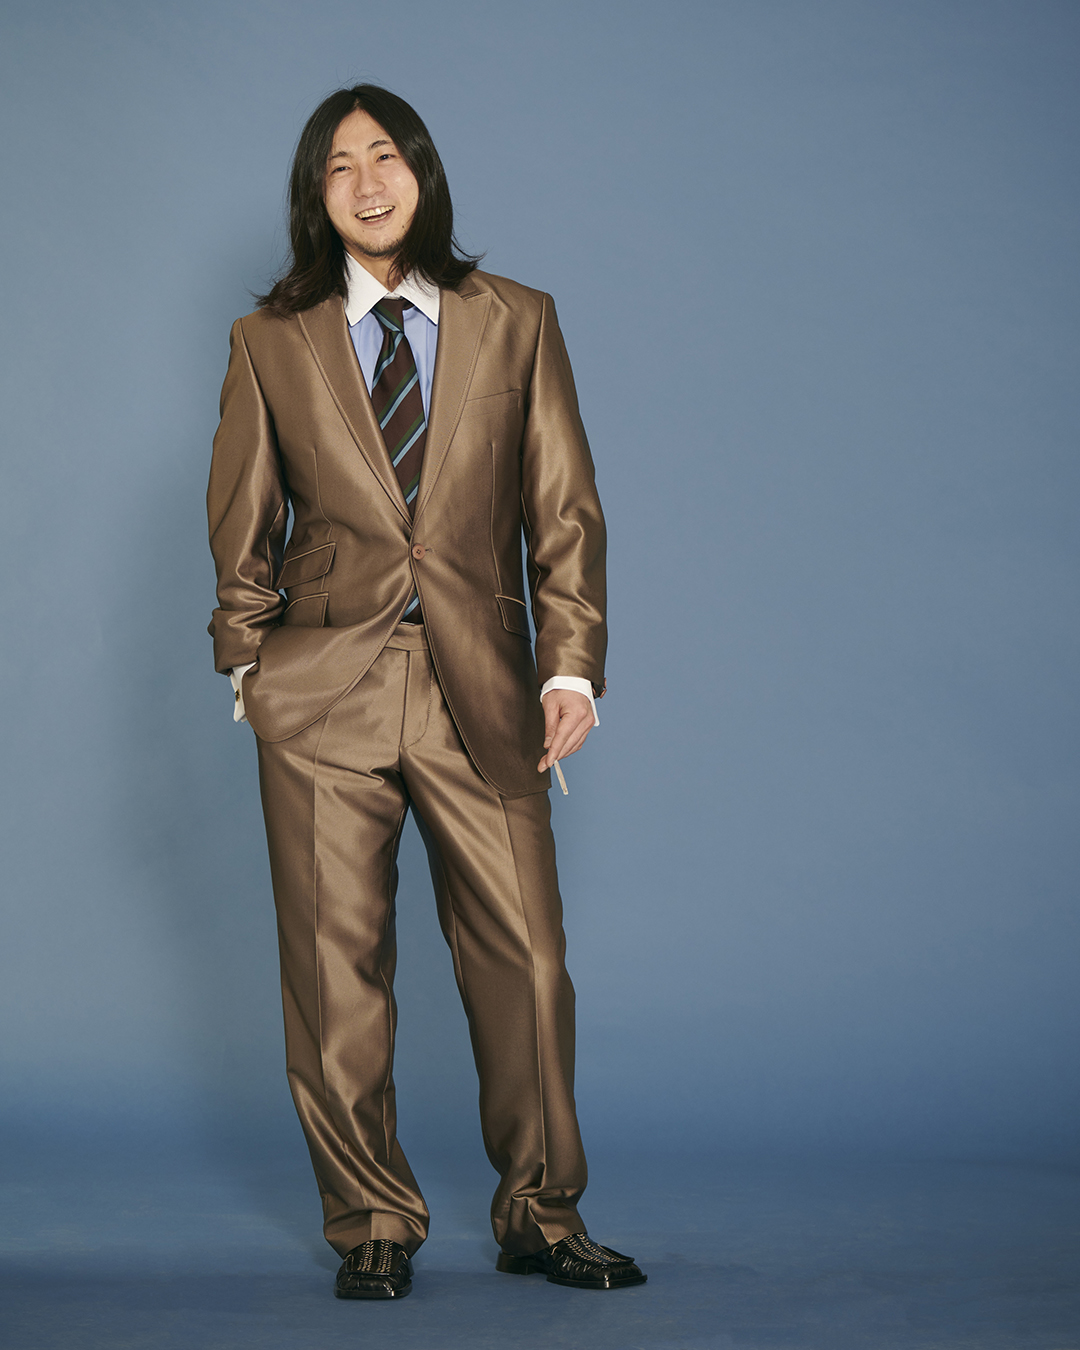 Zack Uchiyama standing portrait